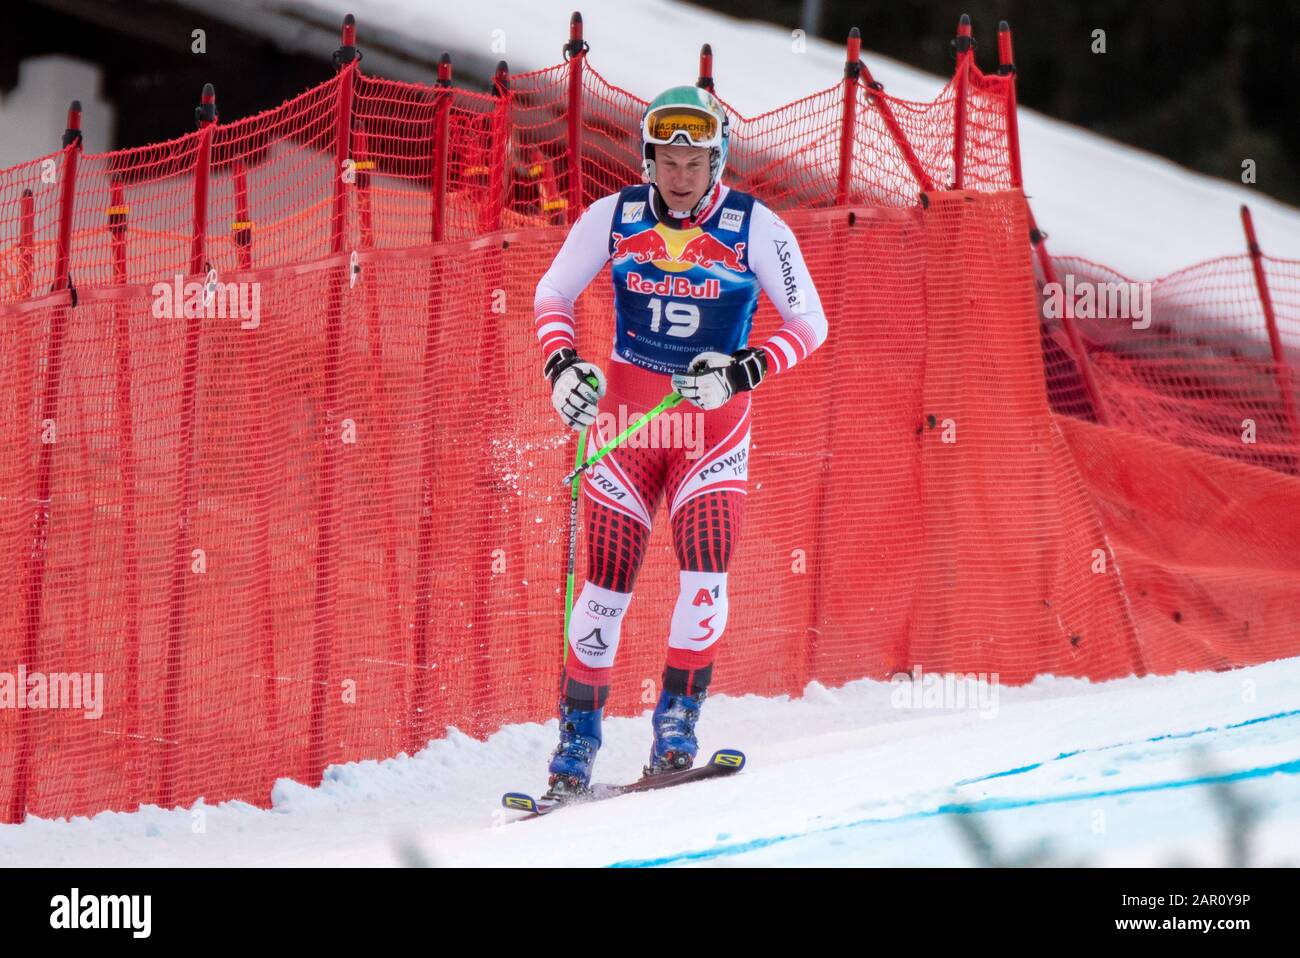 Otmar Striedinger d'Austria presso lo Ski Alpin: 80. Hahnenkamm Race 2020 - Audi FIS Alpine Ski World Cup - Downhill maschile alla Streif il 25 gennaio 2020 a Kitzbuehel, AUSTRIA. Credit: Agenzia Fotografica Sportiva Europea/Alamy Live News Foto Stock